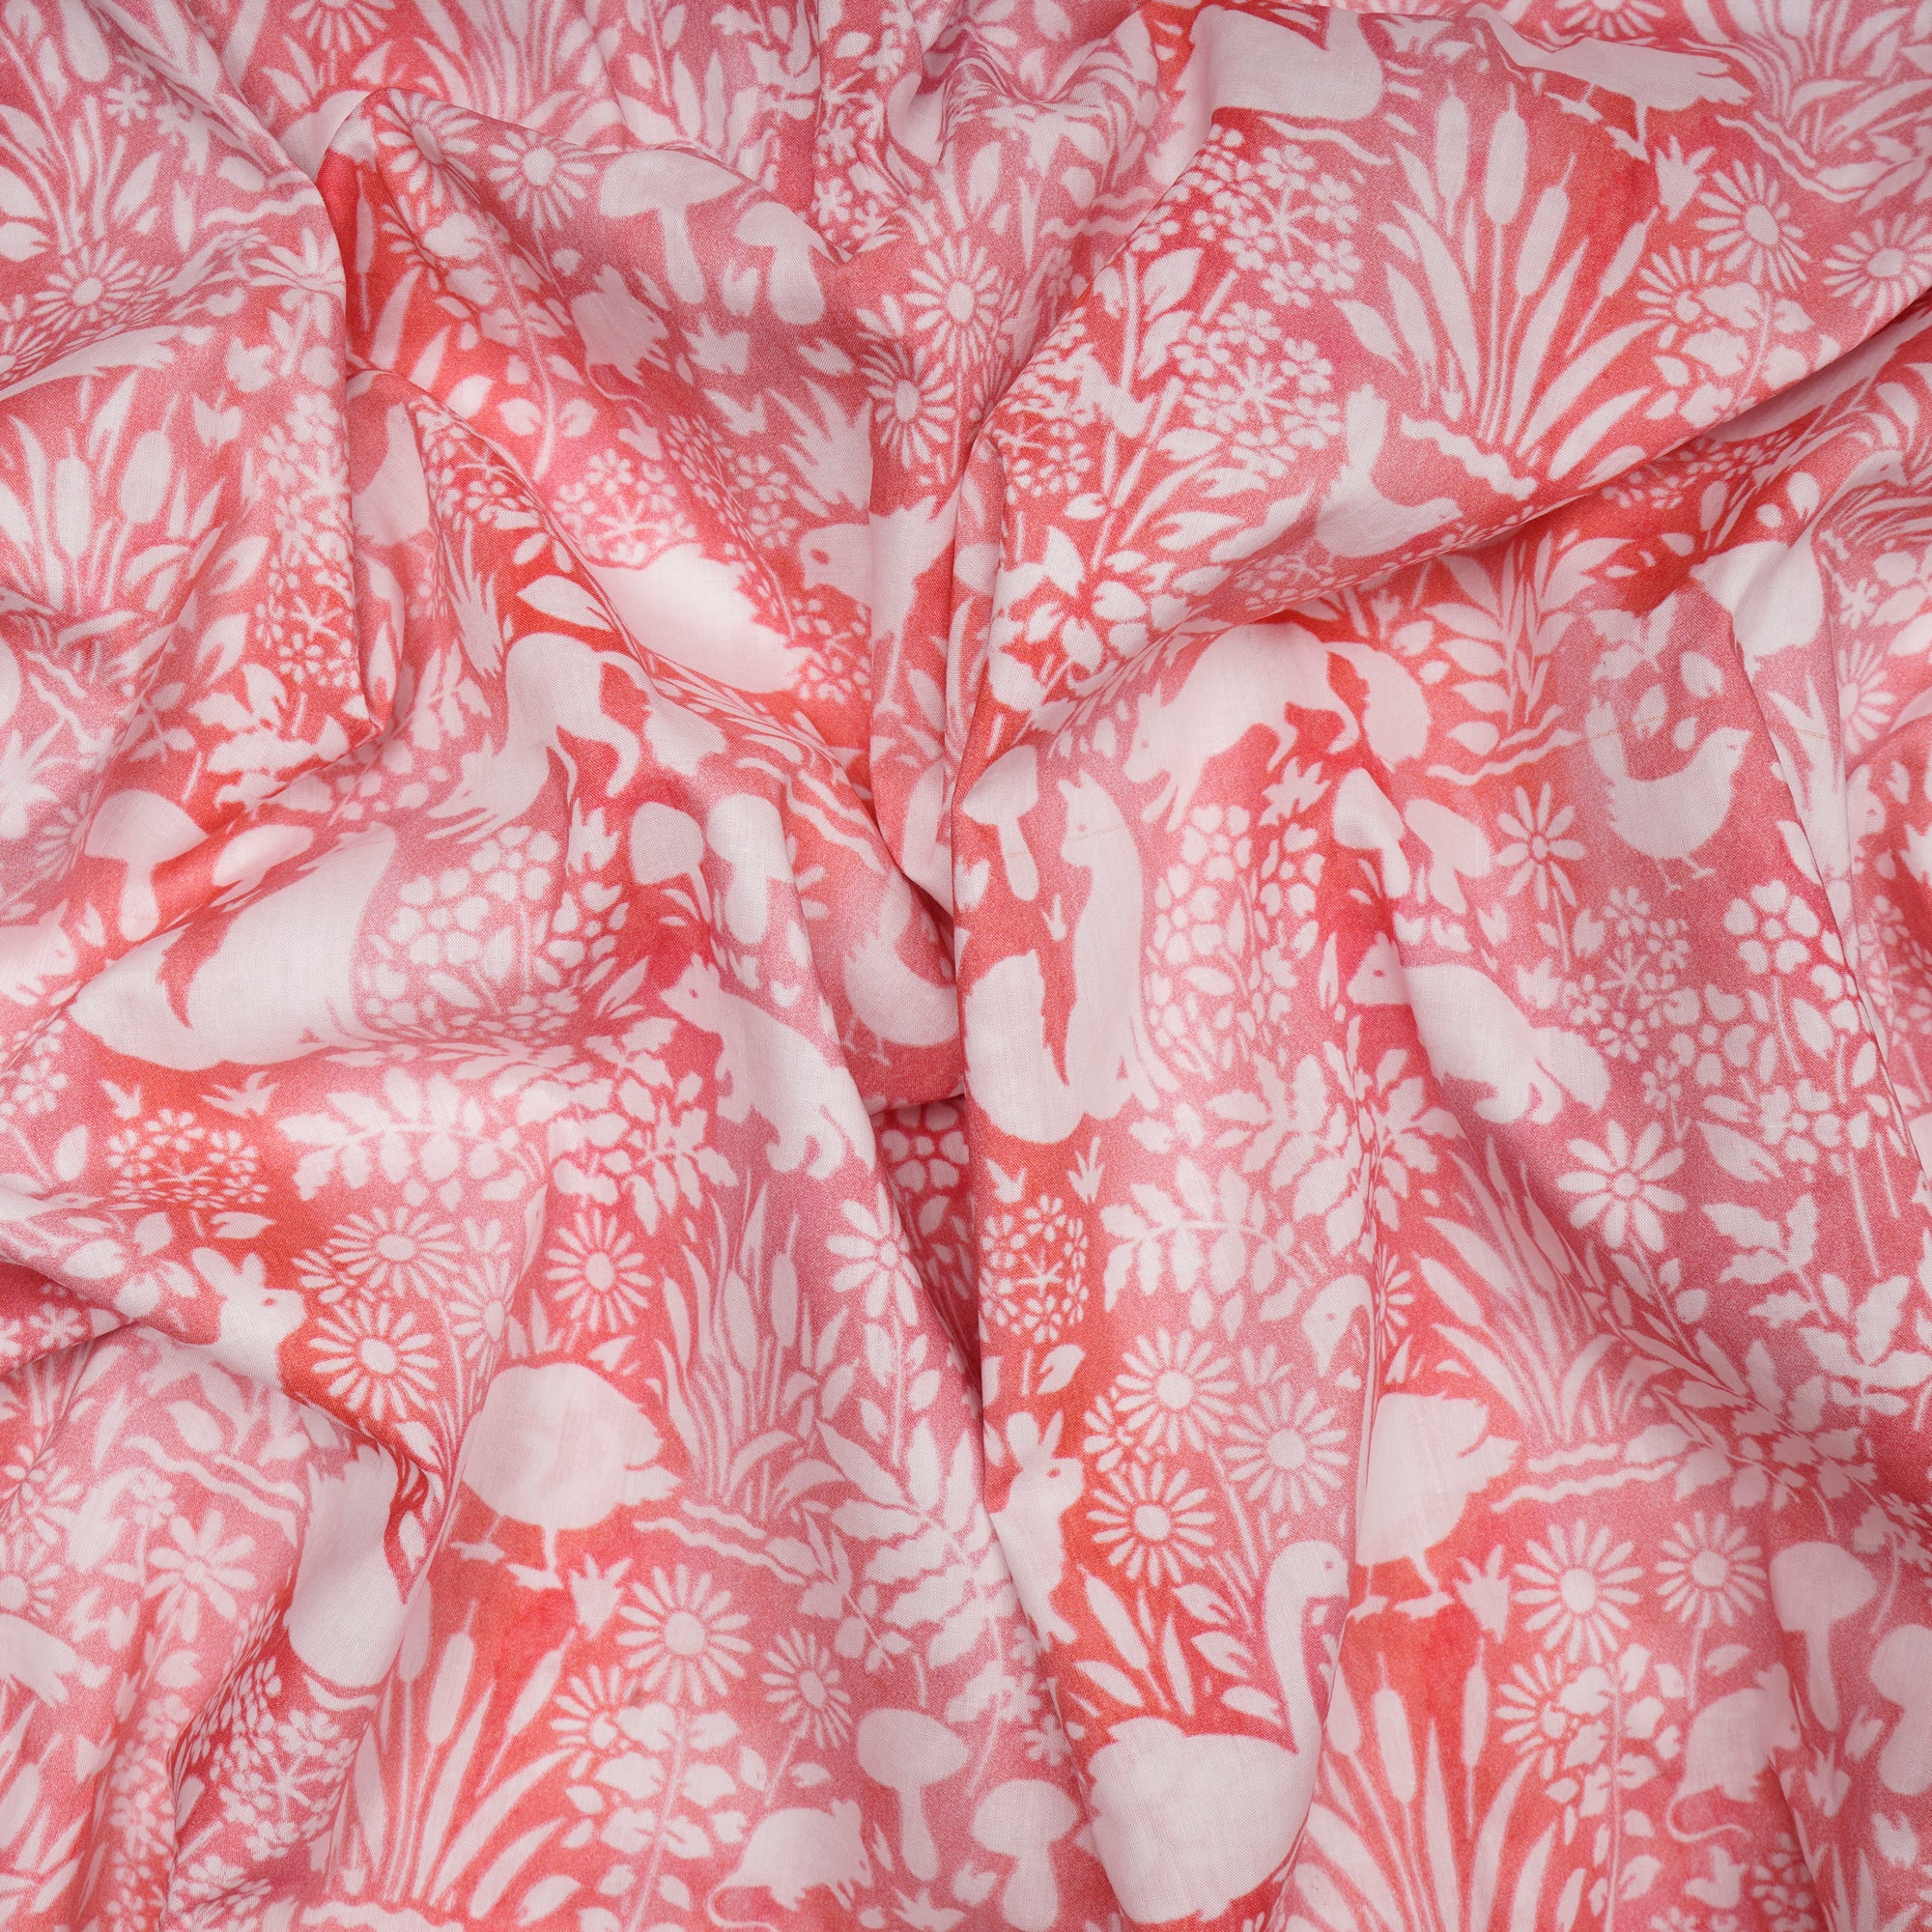 Murex Shell Tropical Pattern Digital Print Lawn Cotton Fabric